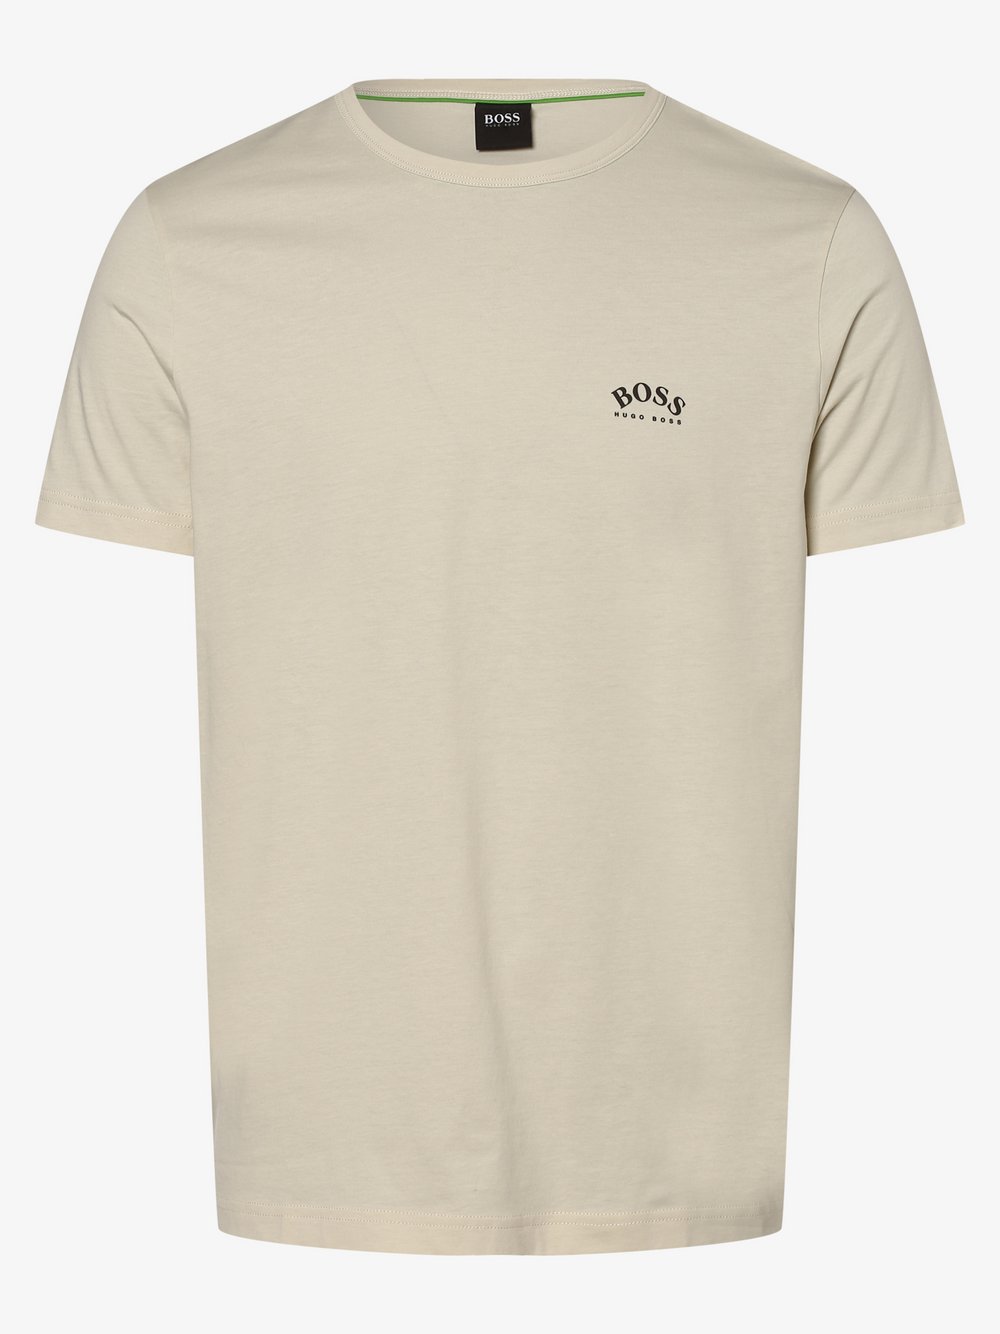 BOSS Athleisure - T-shirt męski – Tee Curved, beżowy